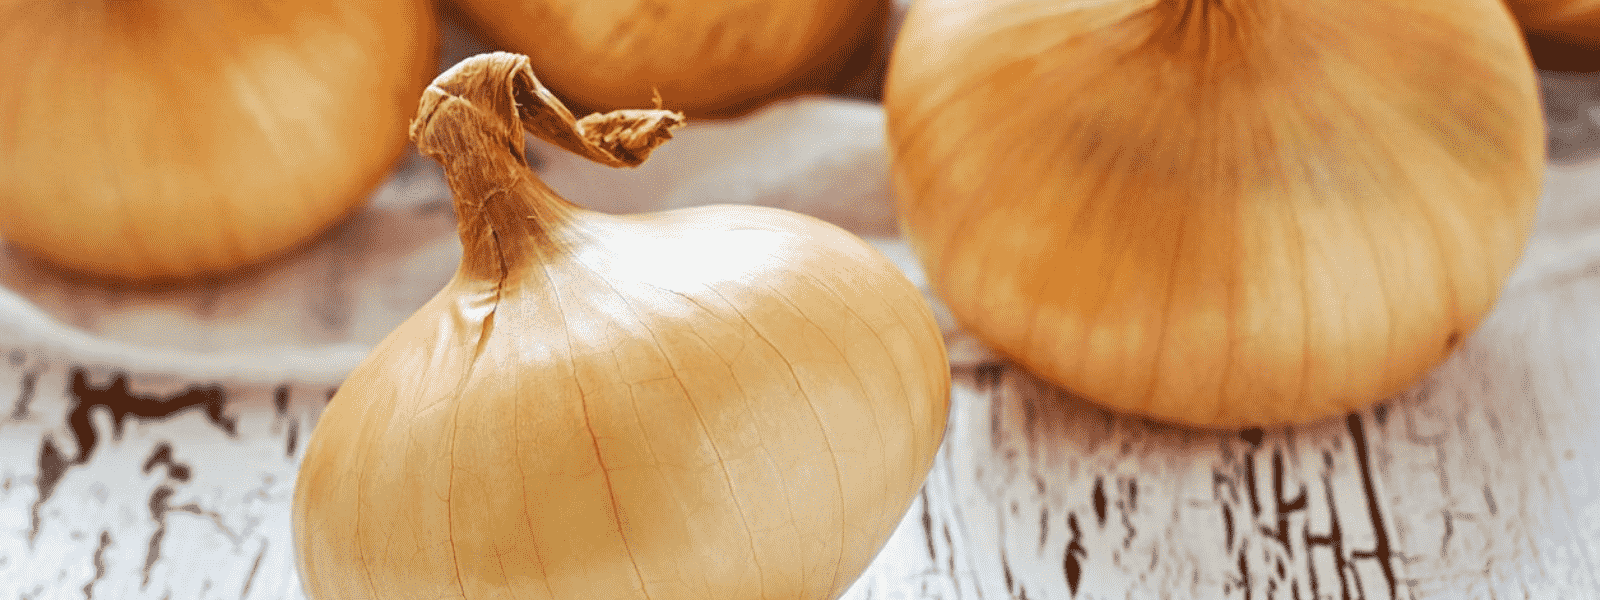 India loosens onion export ban to help neighbors